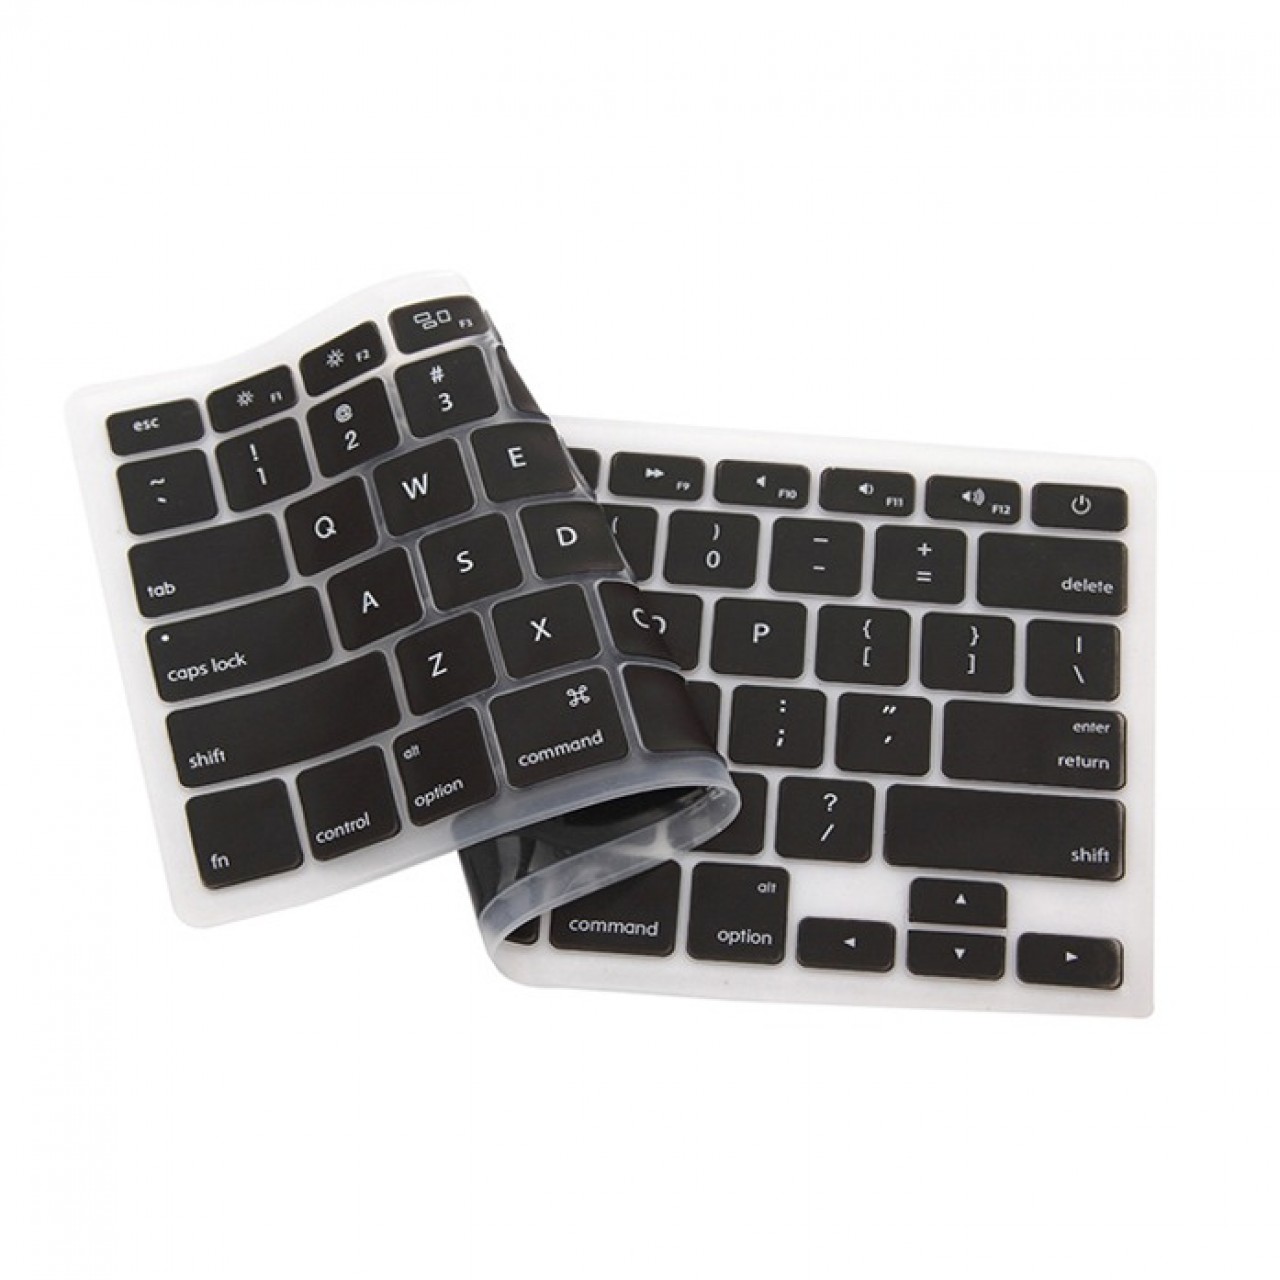 Macbook Pro 17 Inch Color Key Skin - Black